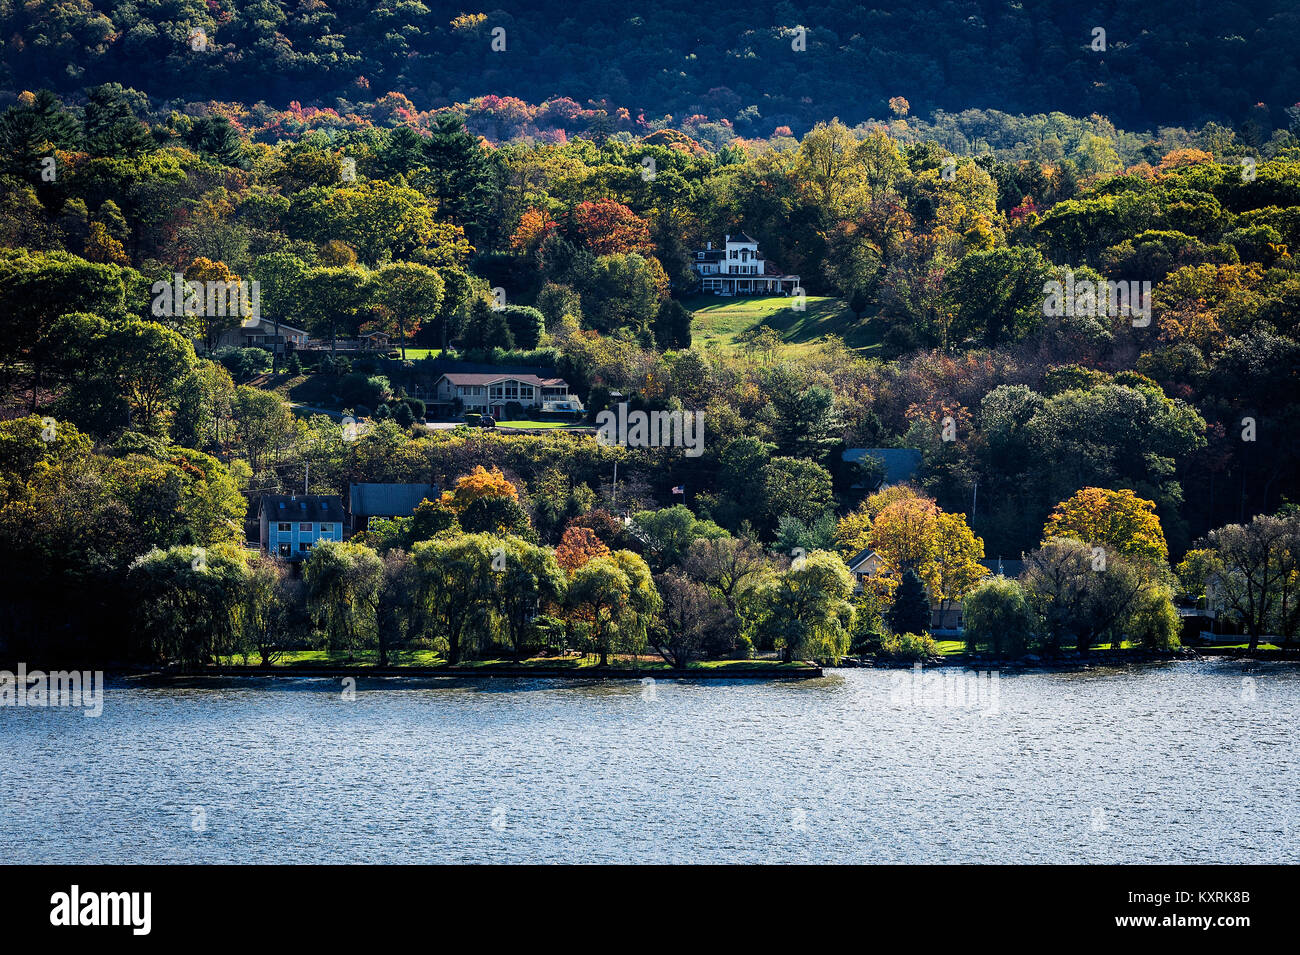 Homes overlooking the Hudson River, Phiipstown, New York, USA. Stock Photo